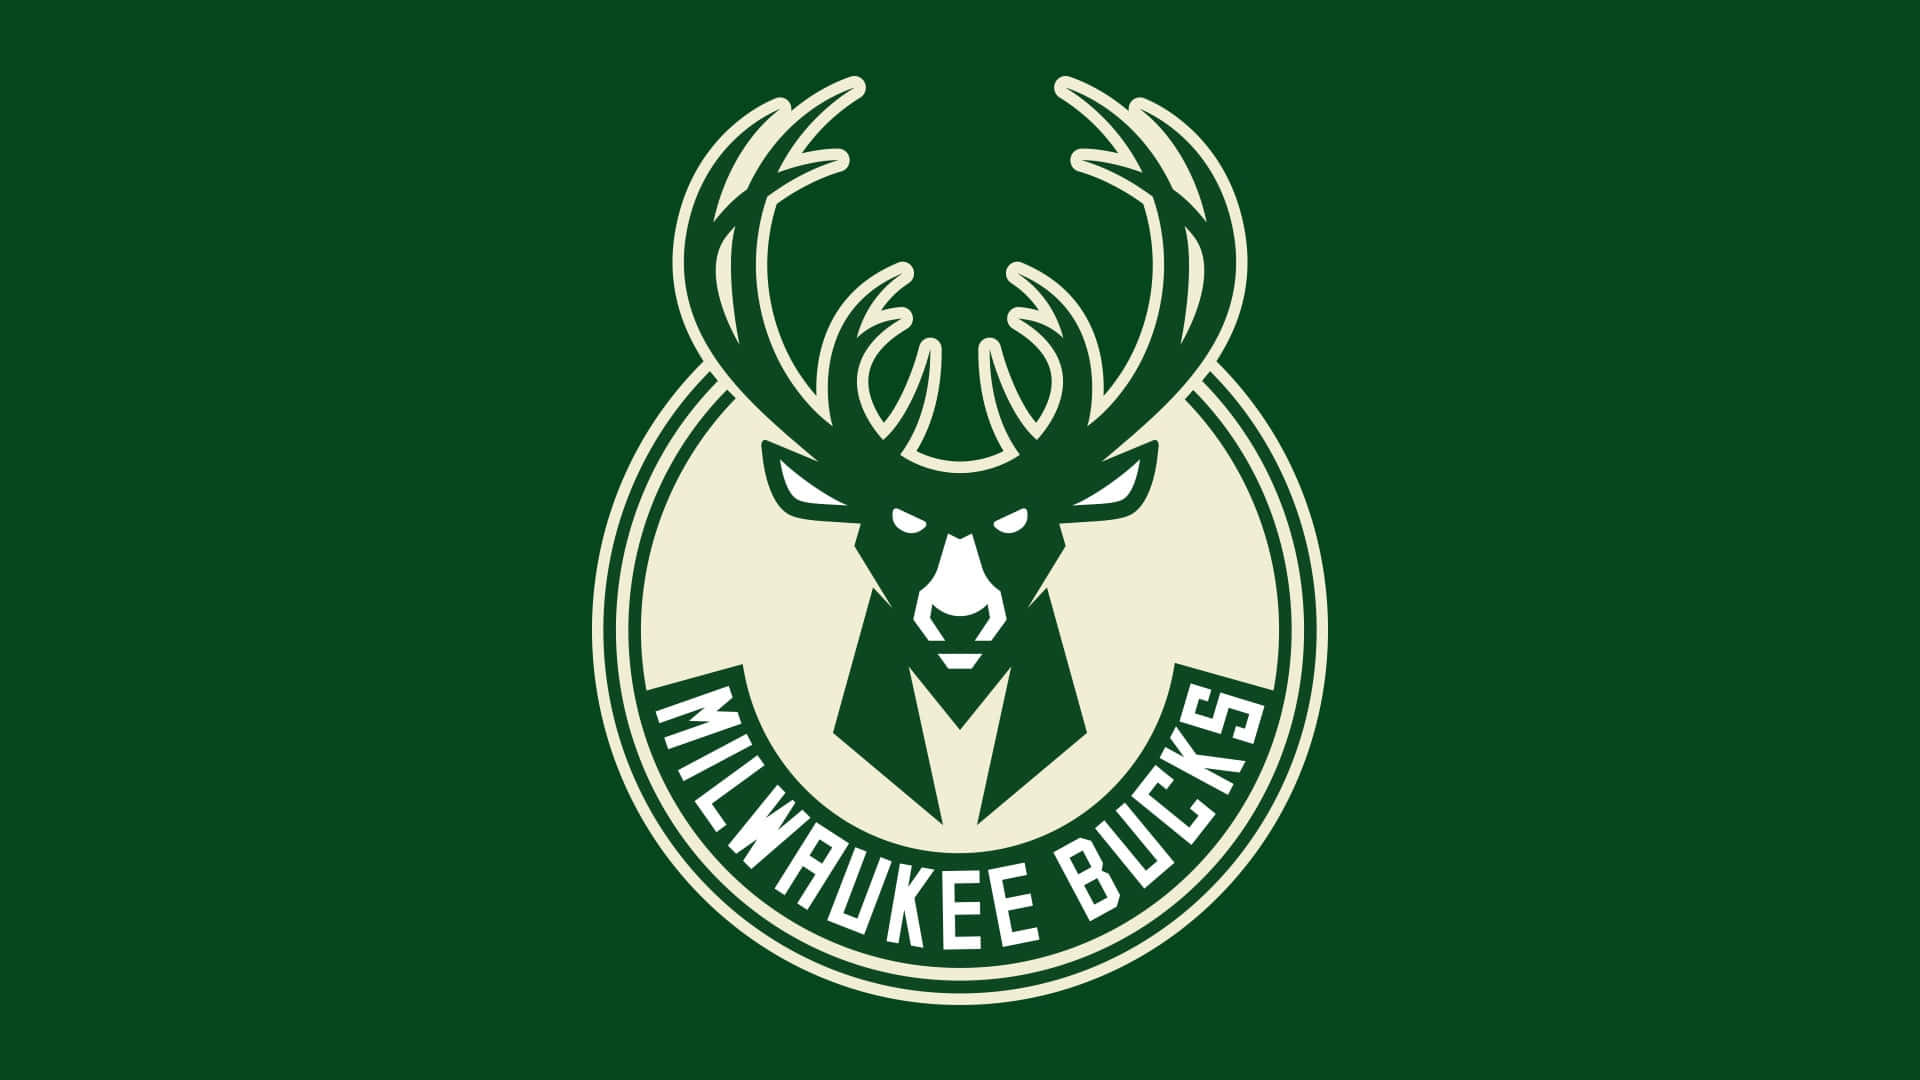 Milwaukee Bucks-logo 1920 X 1080 Wallpaper